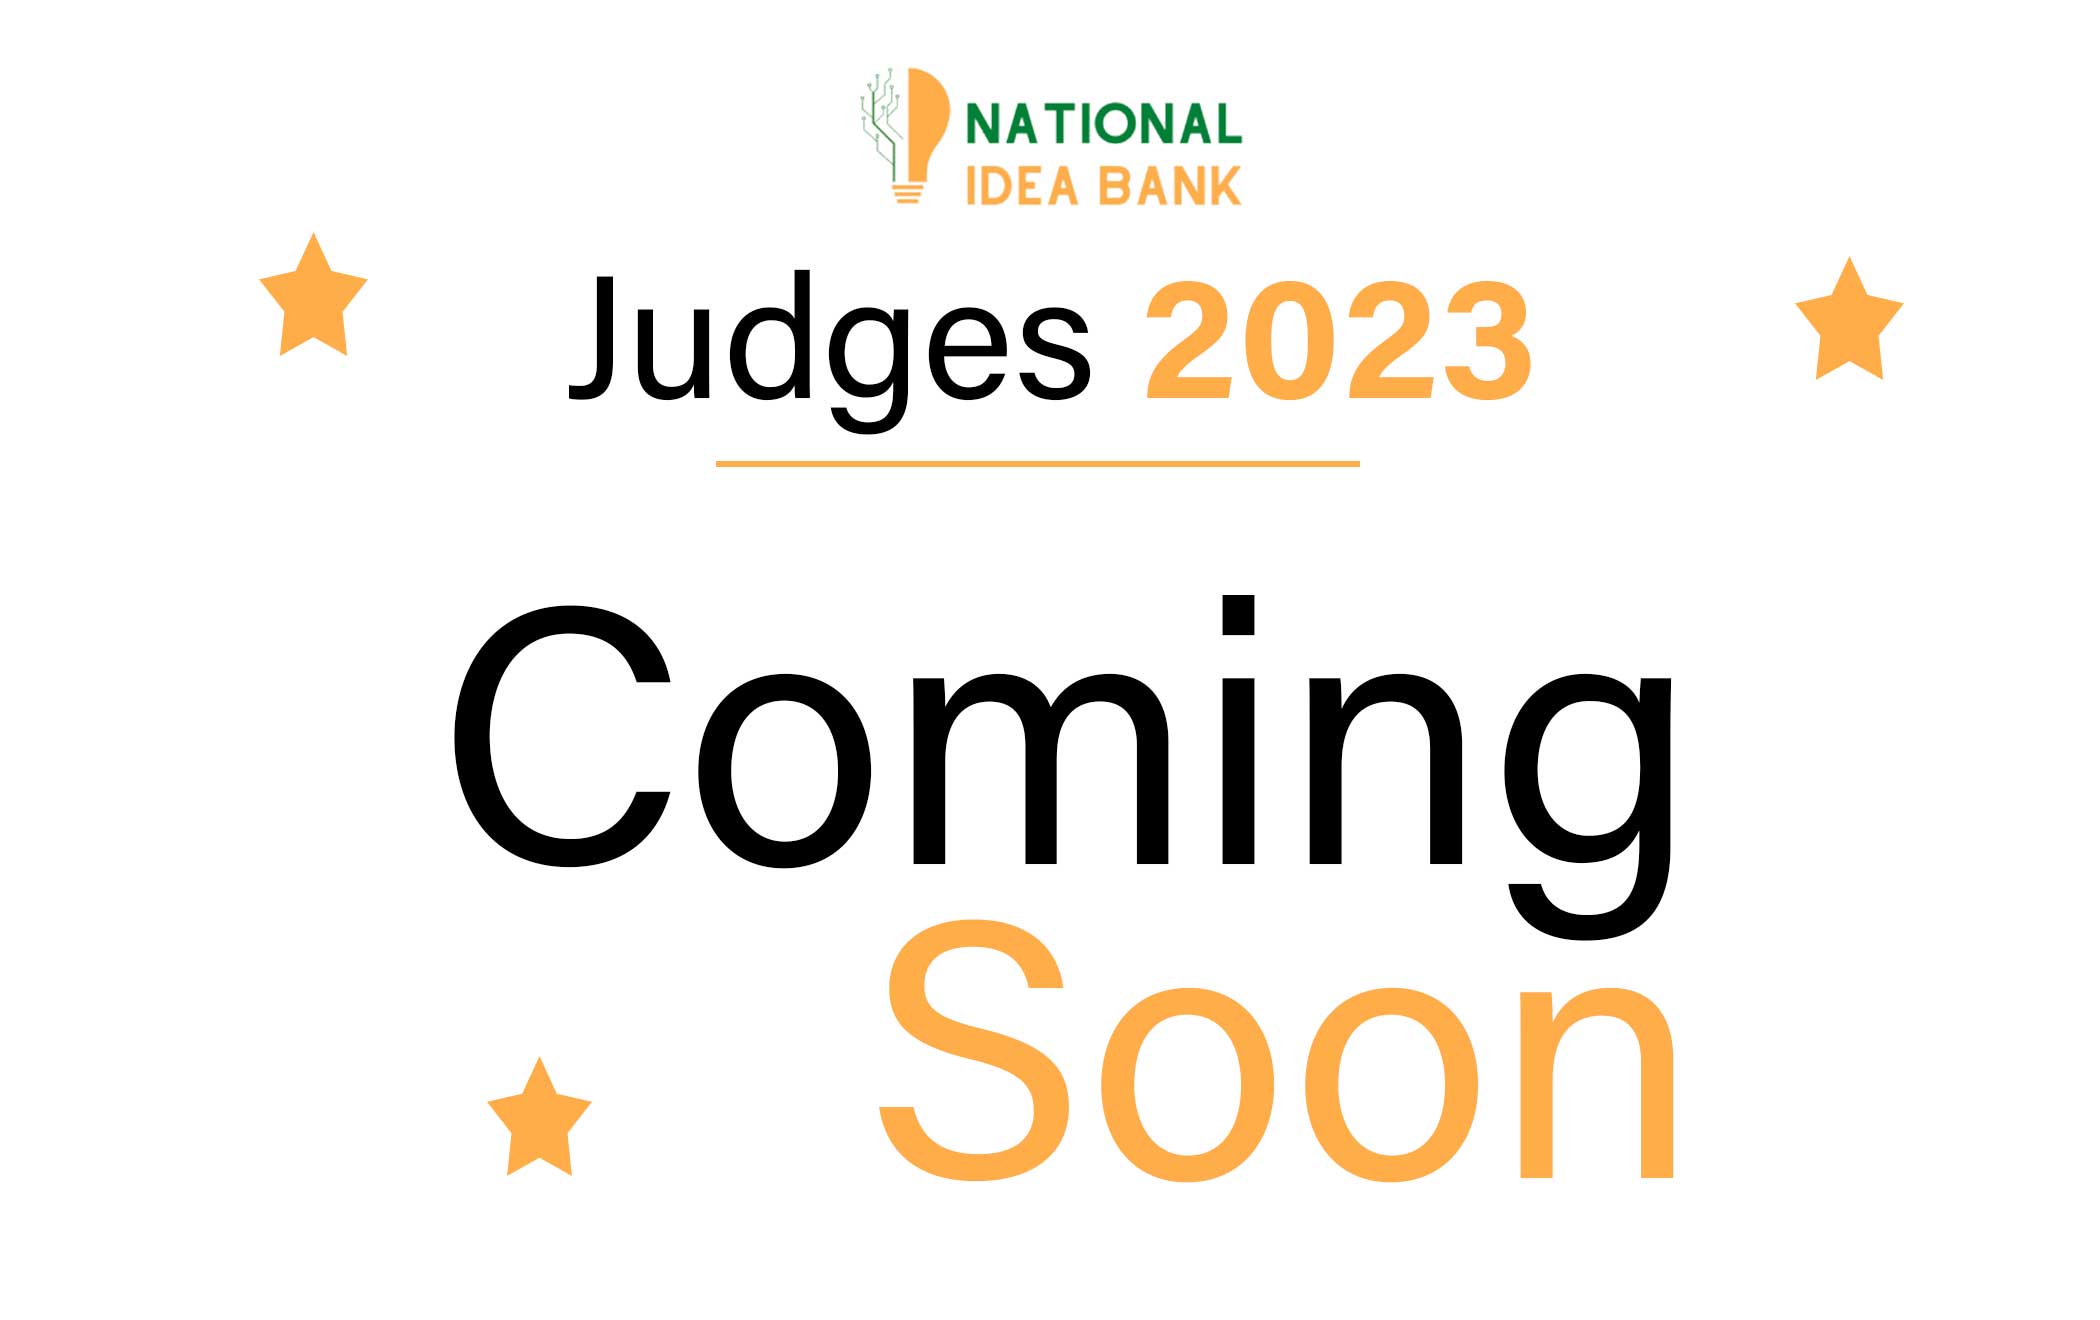 NIB judges 2023